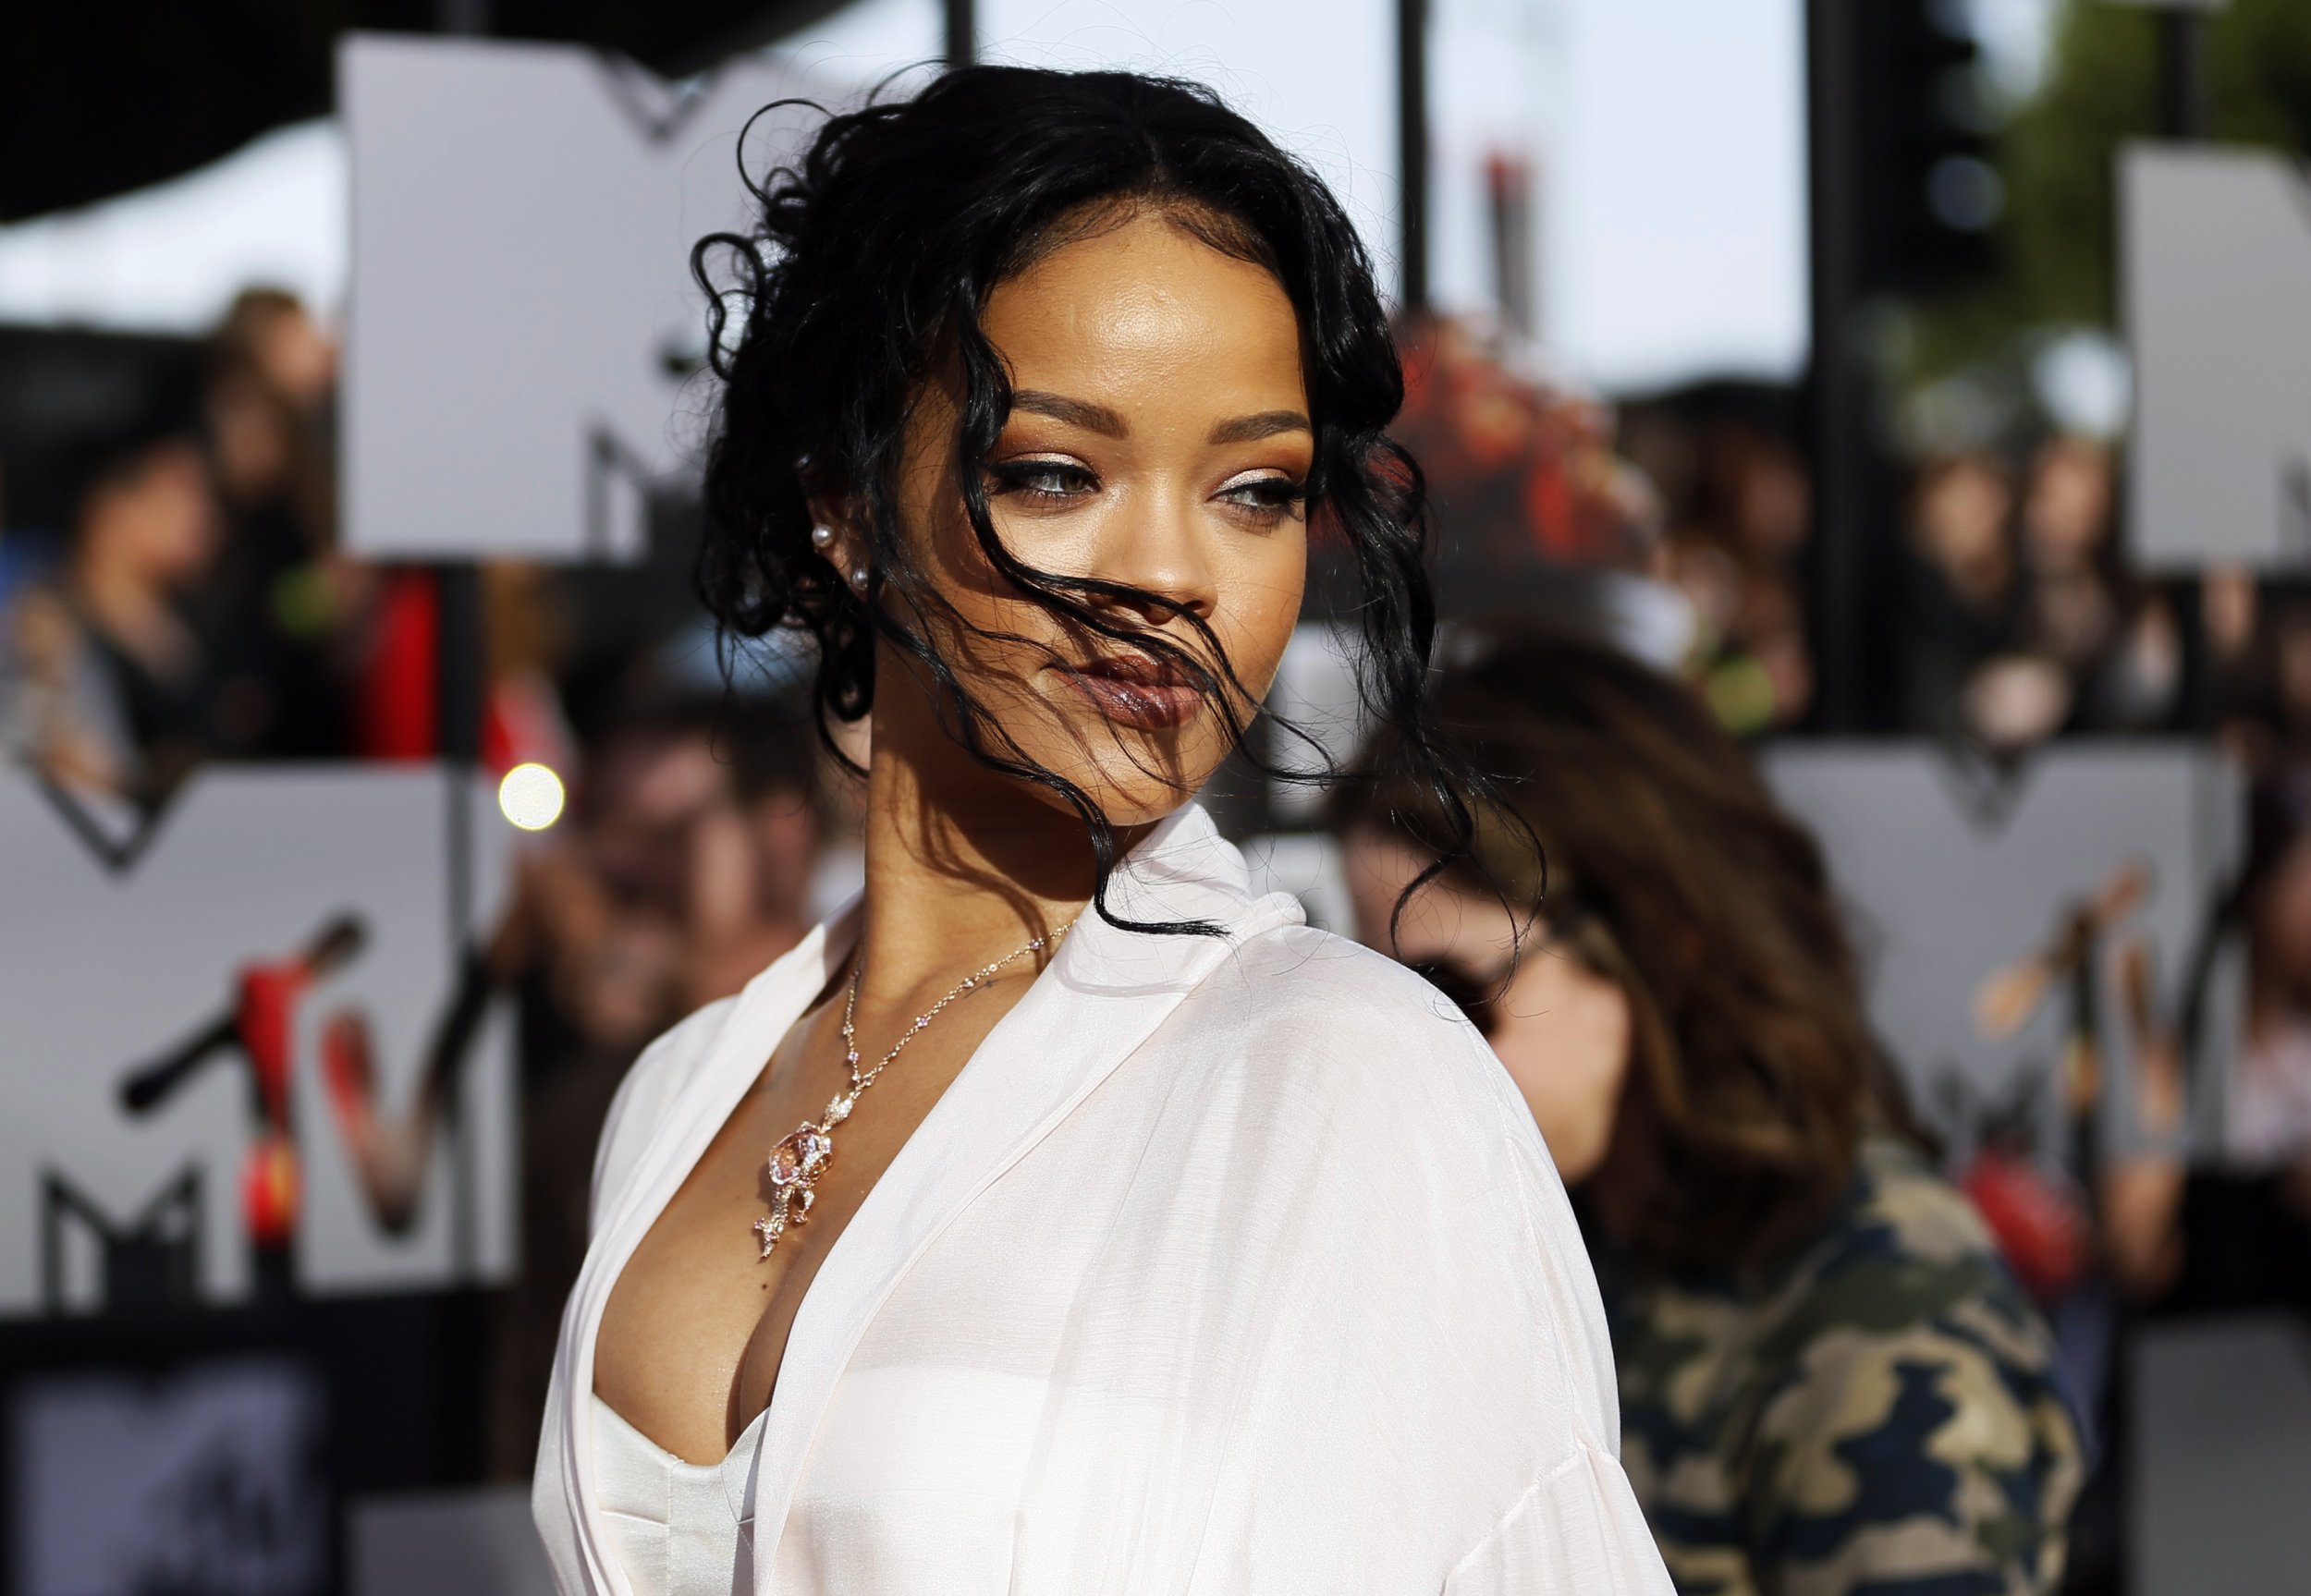 Rihanna Wears Risqué Metallic Dress For Dior Shoot Shows Off Assets Ibtimes